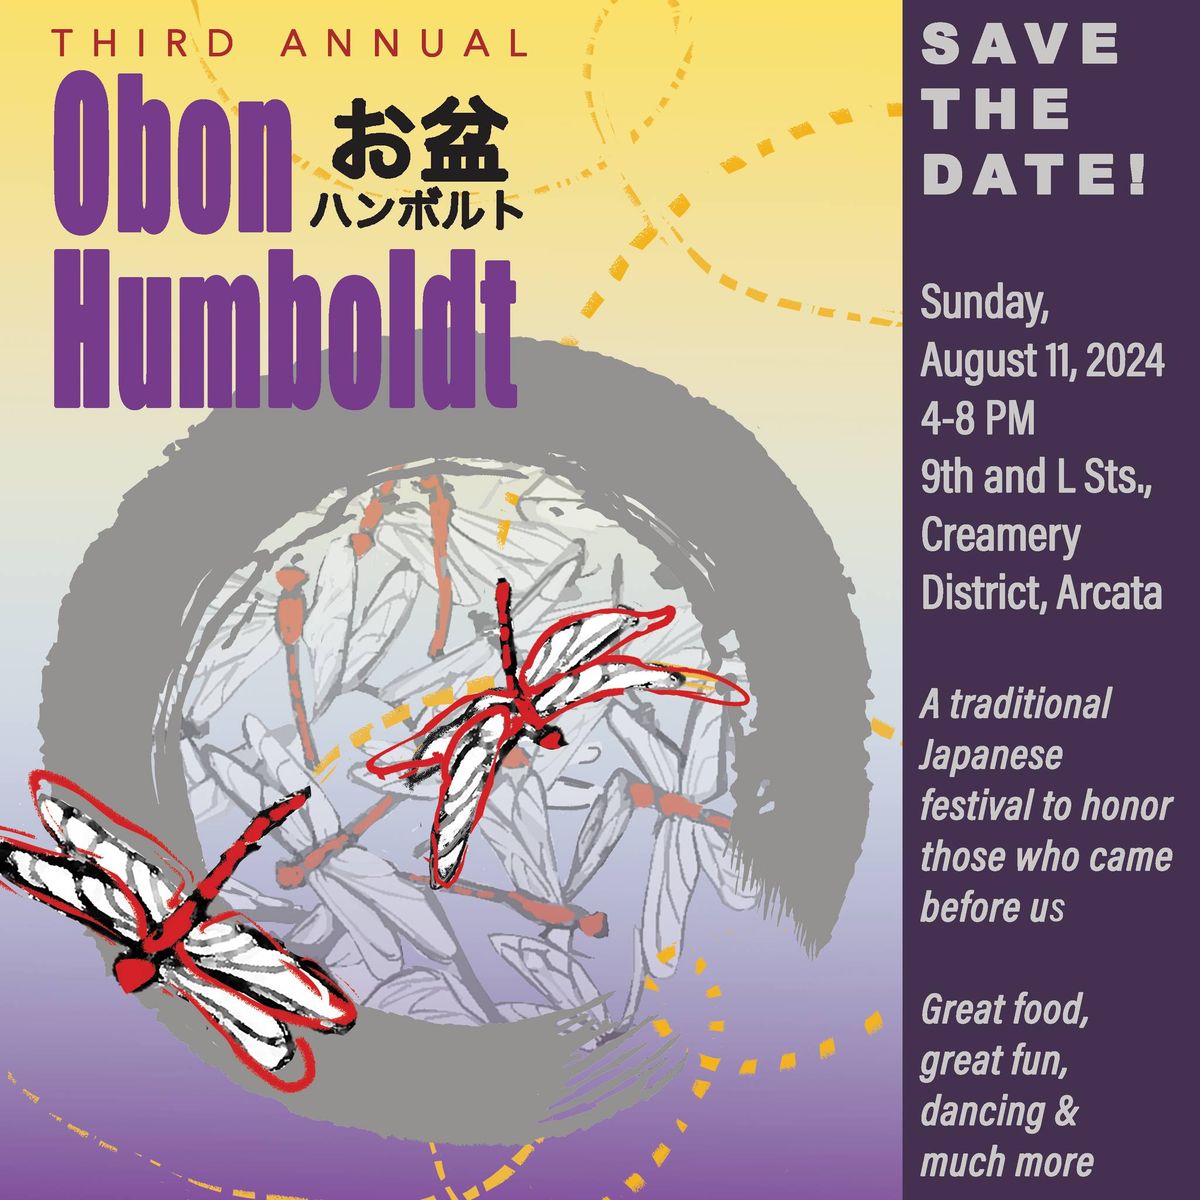 OBON Humboldt 2024